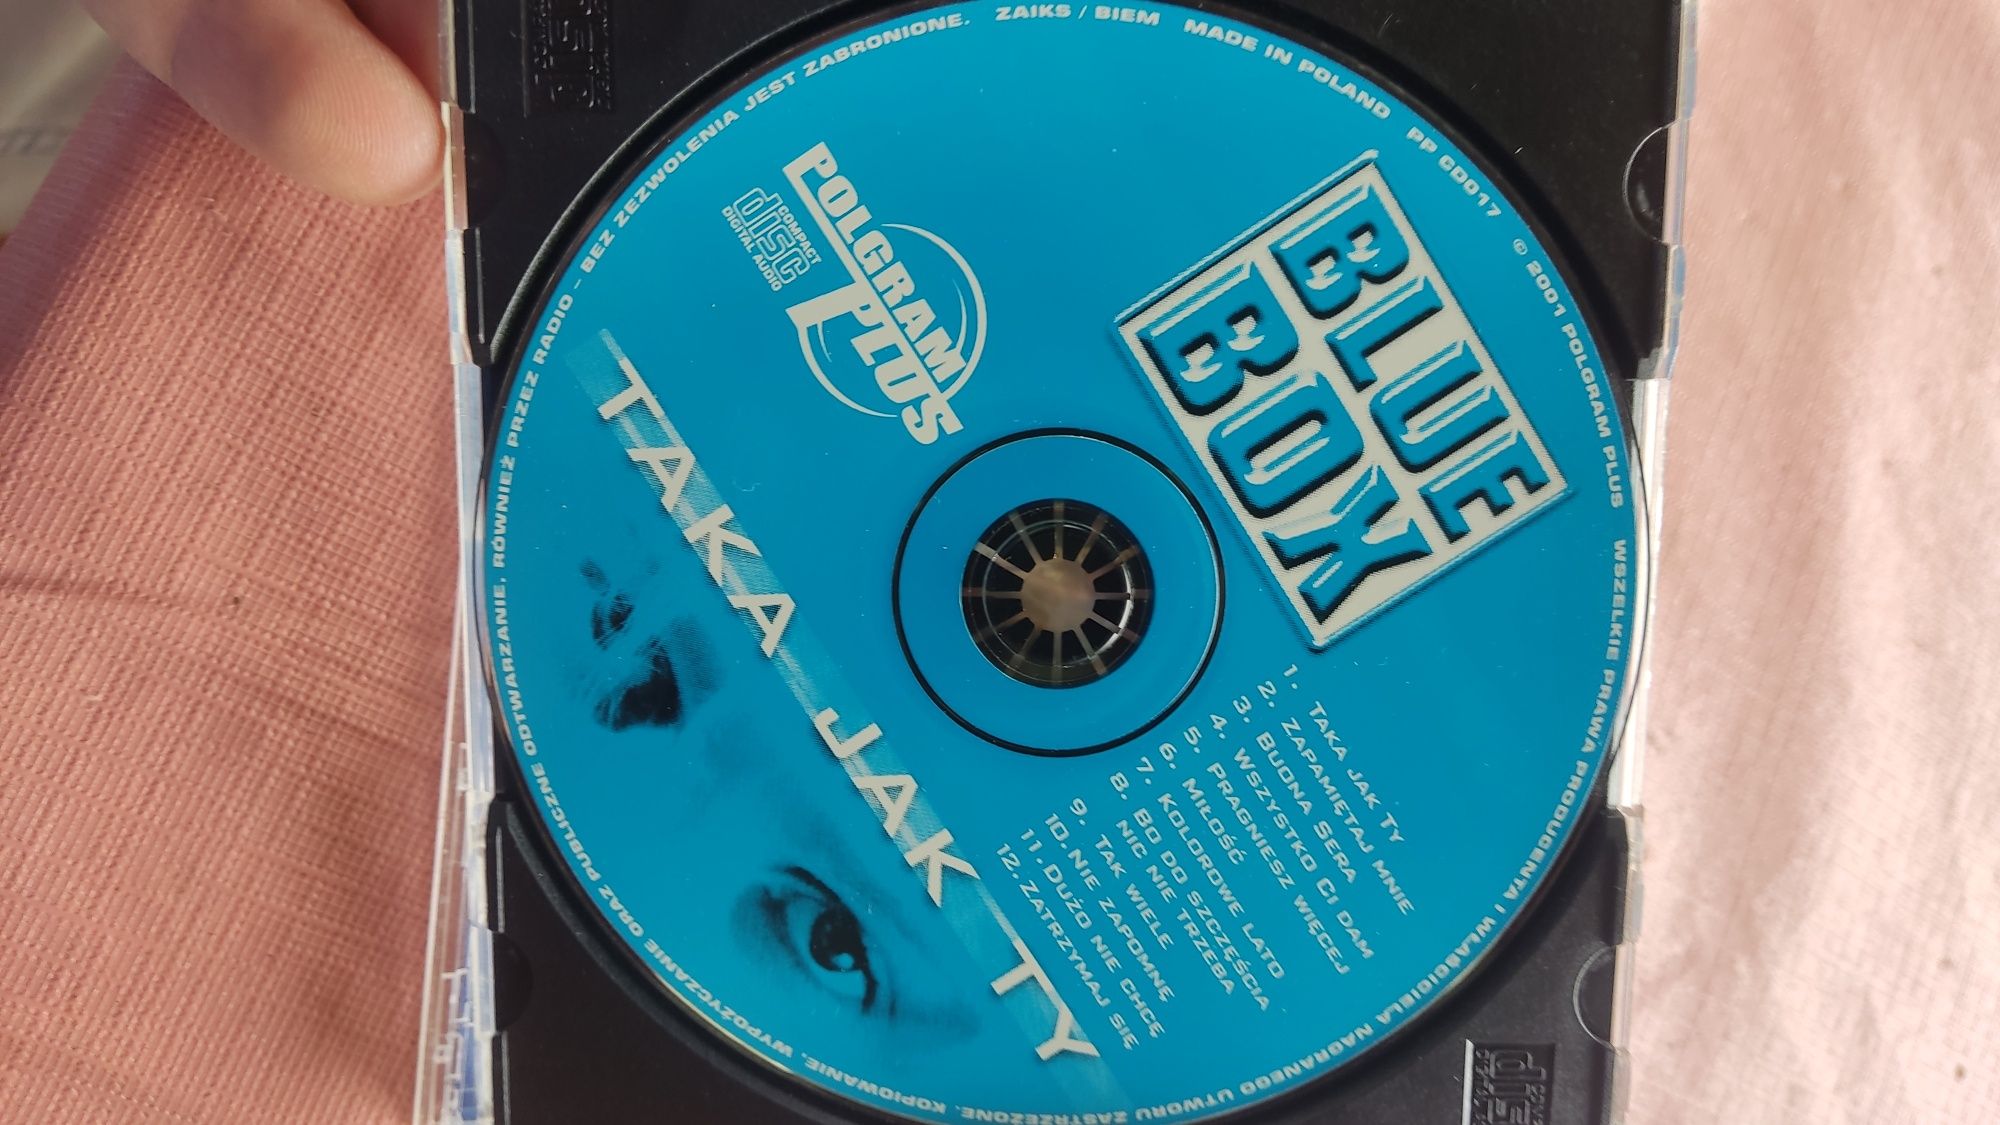 Blue Box Taka jak ty CD disco polo